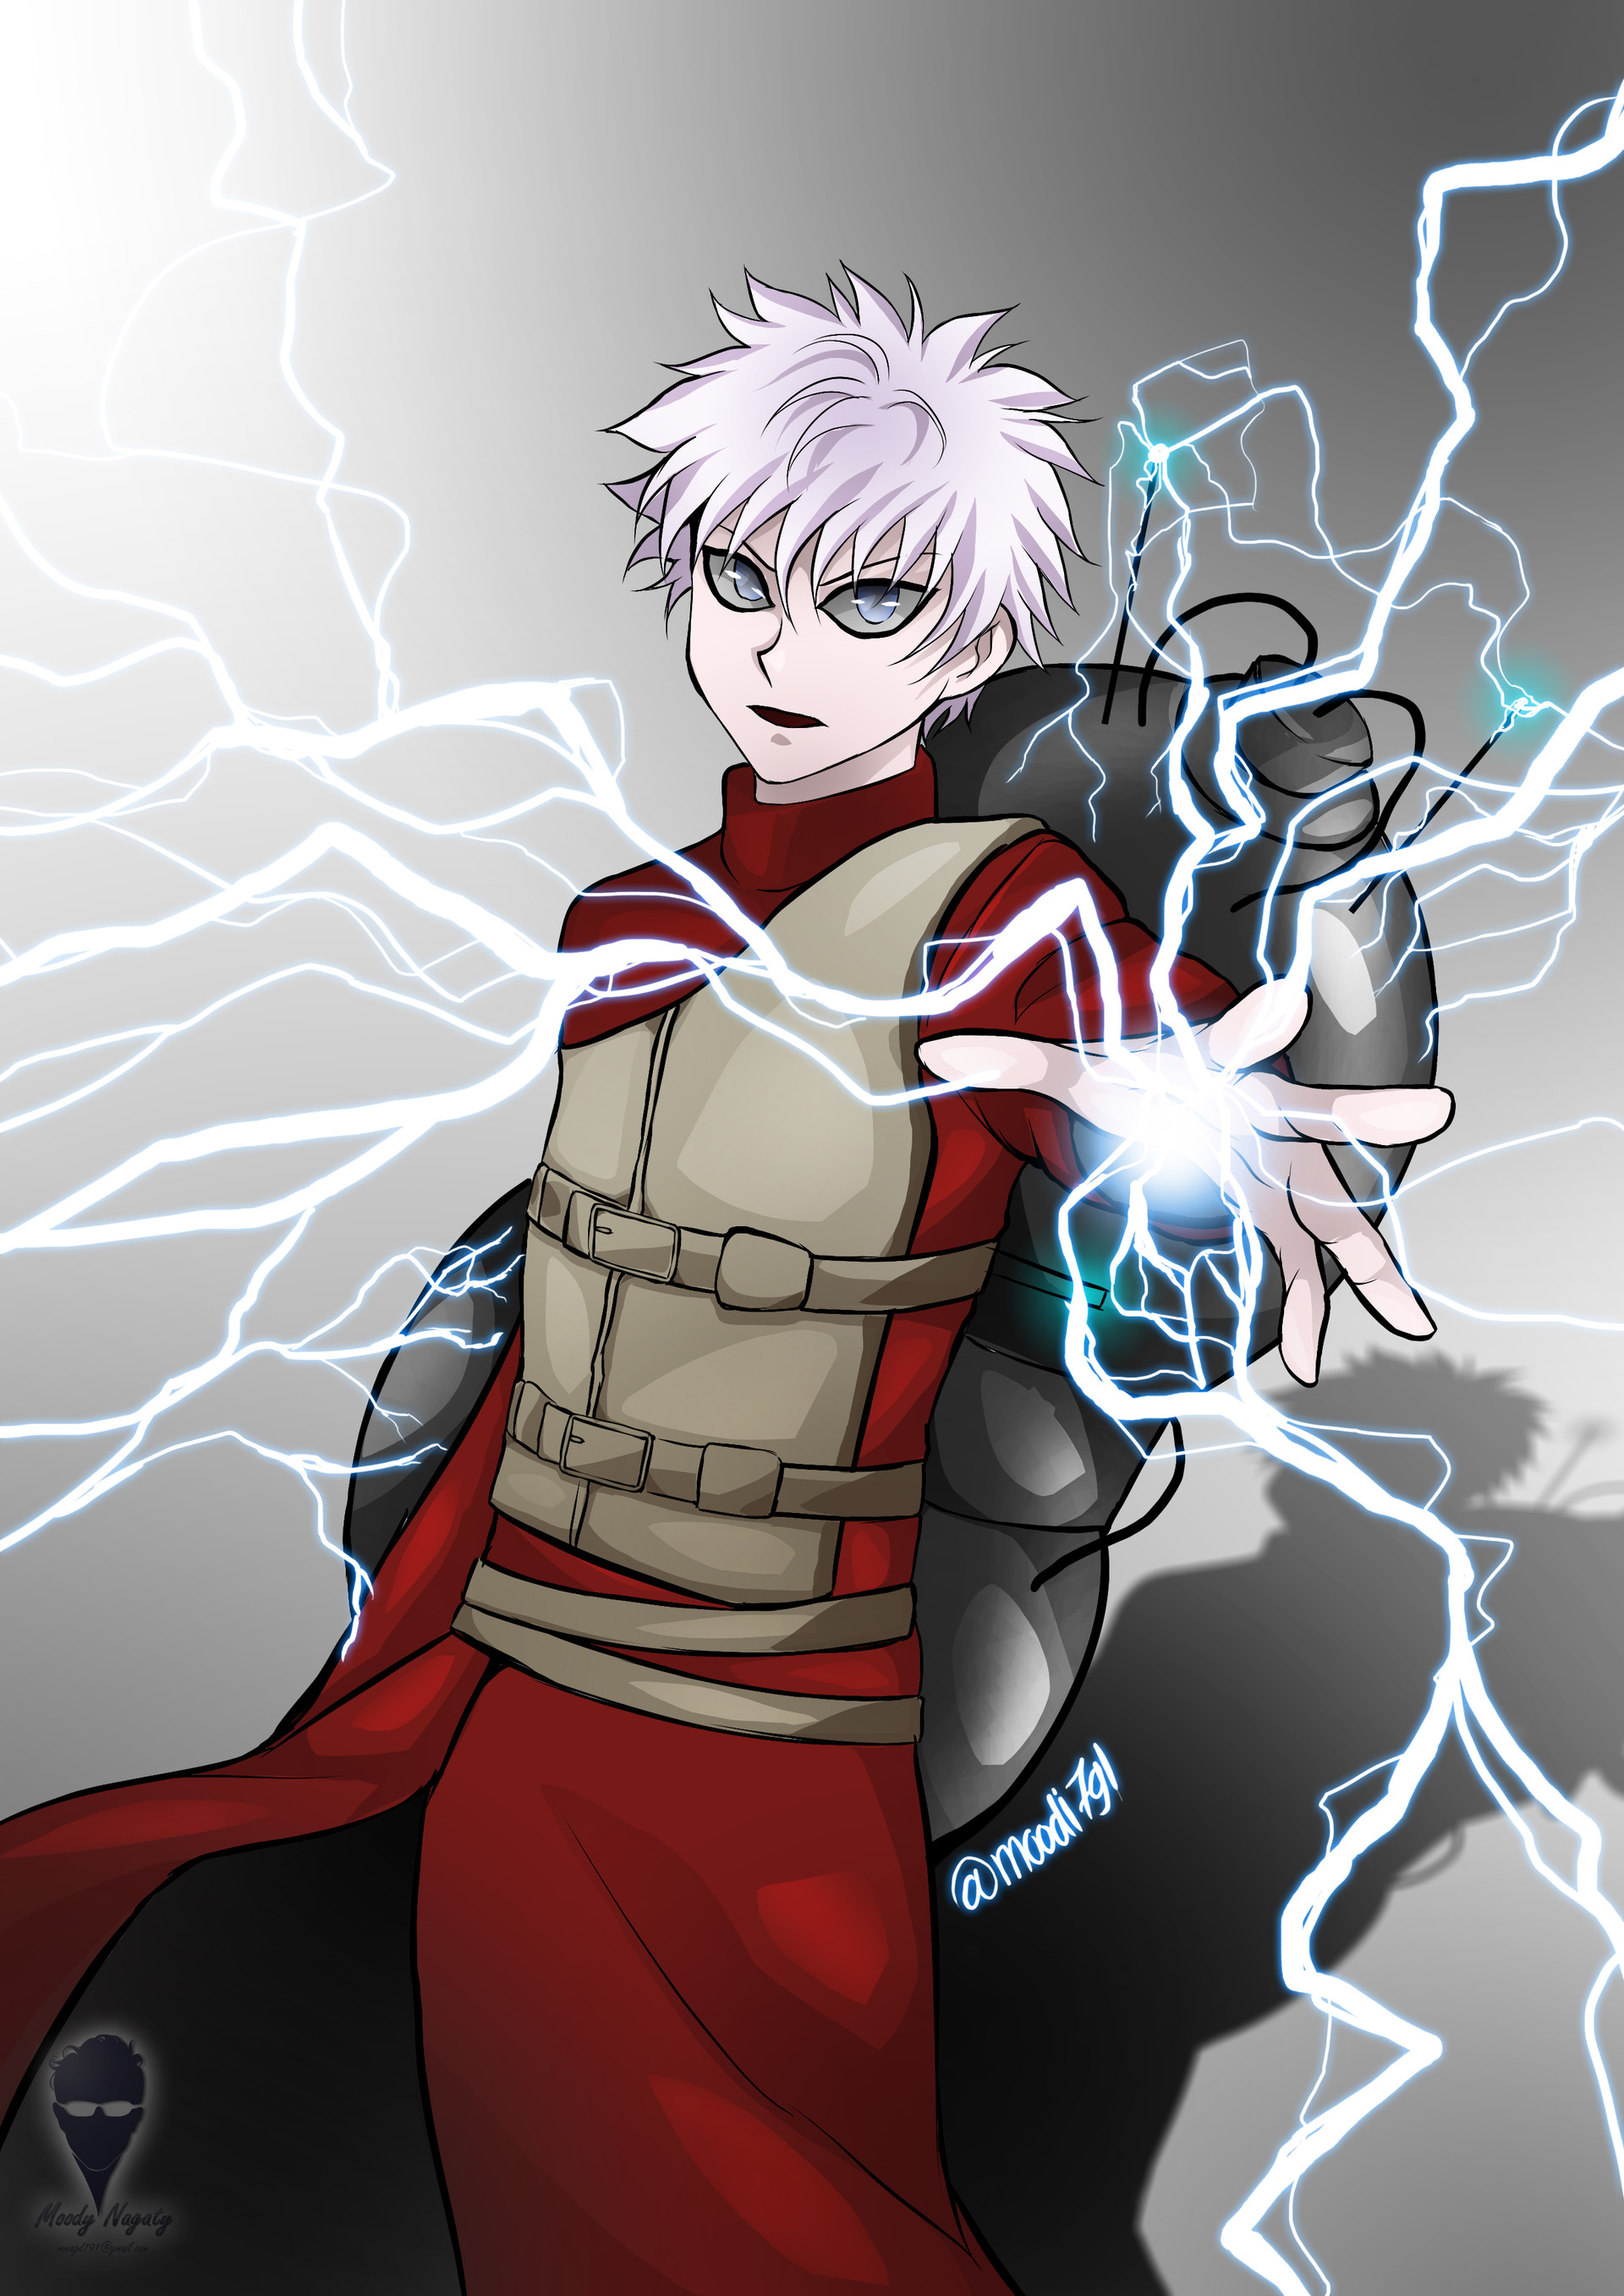 Top 15 Badass Male Anime Characters with LightningElectricity Abilities   Otaku Fantasy  Anime Otaku Gaming and Tech Blog